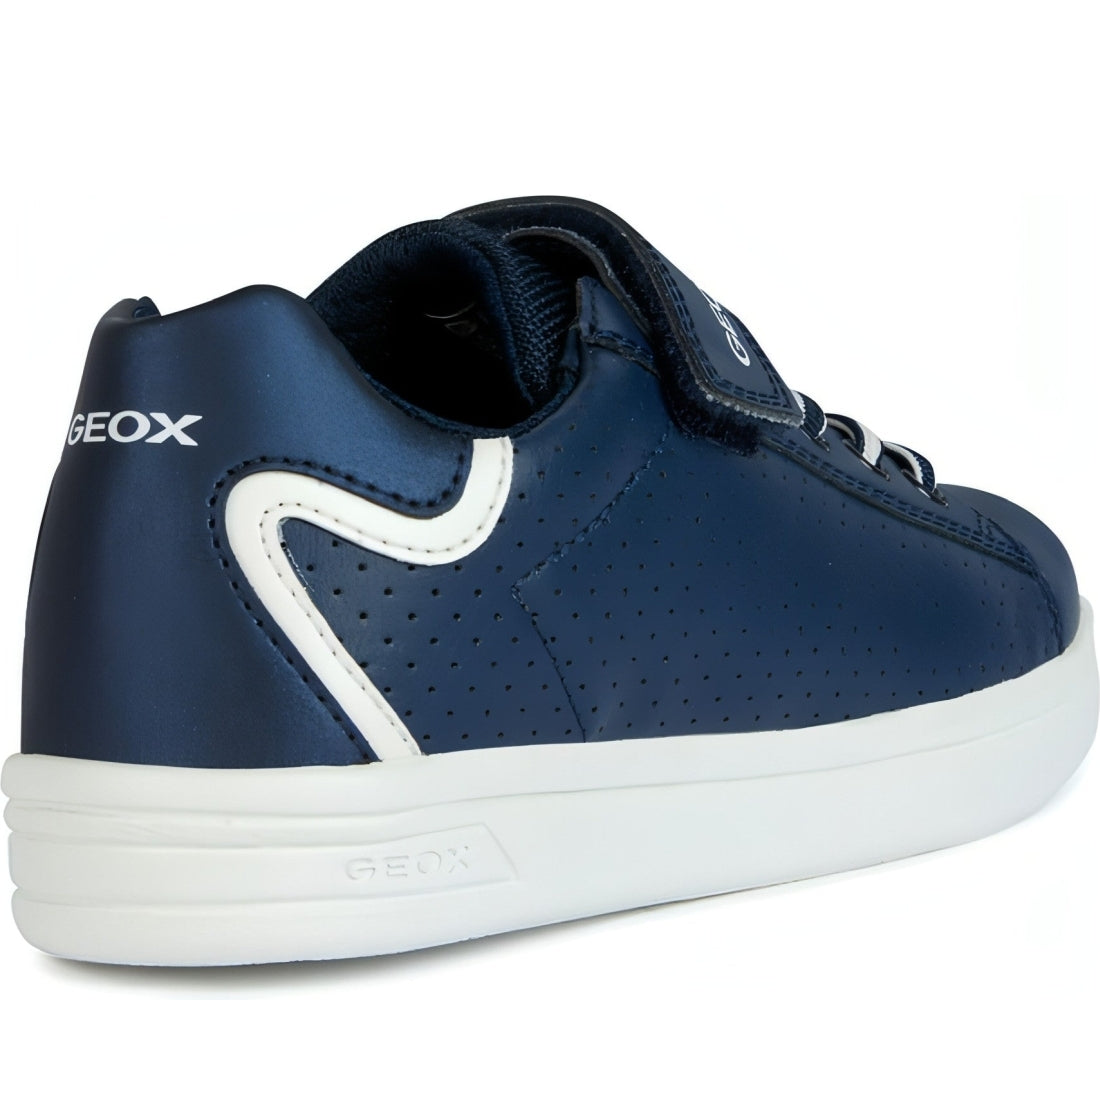 Geox boys navy, white djrock sport shoes | Vilbury London